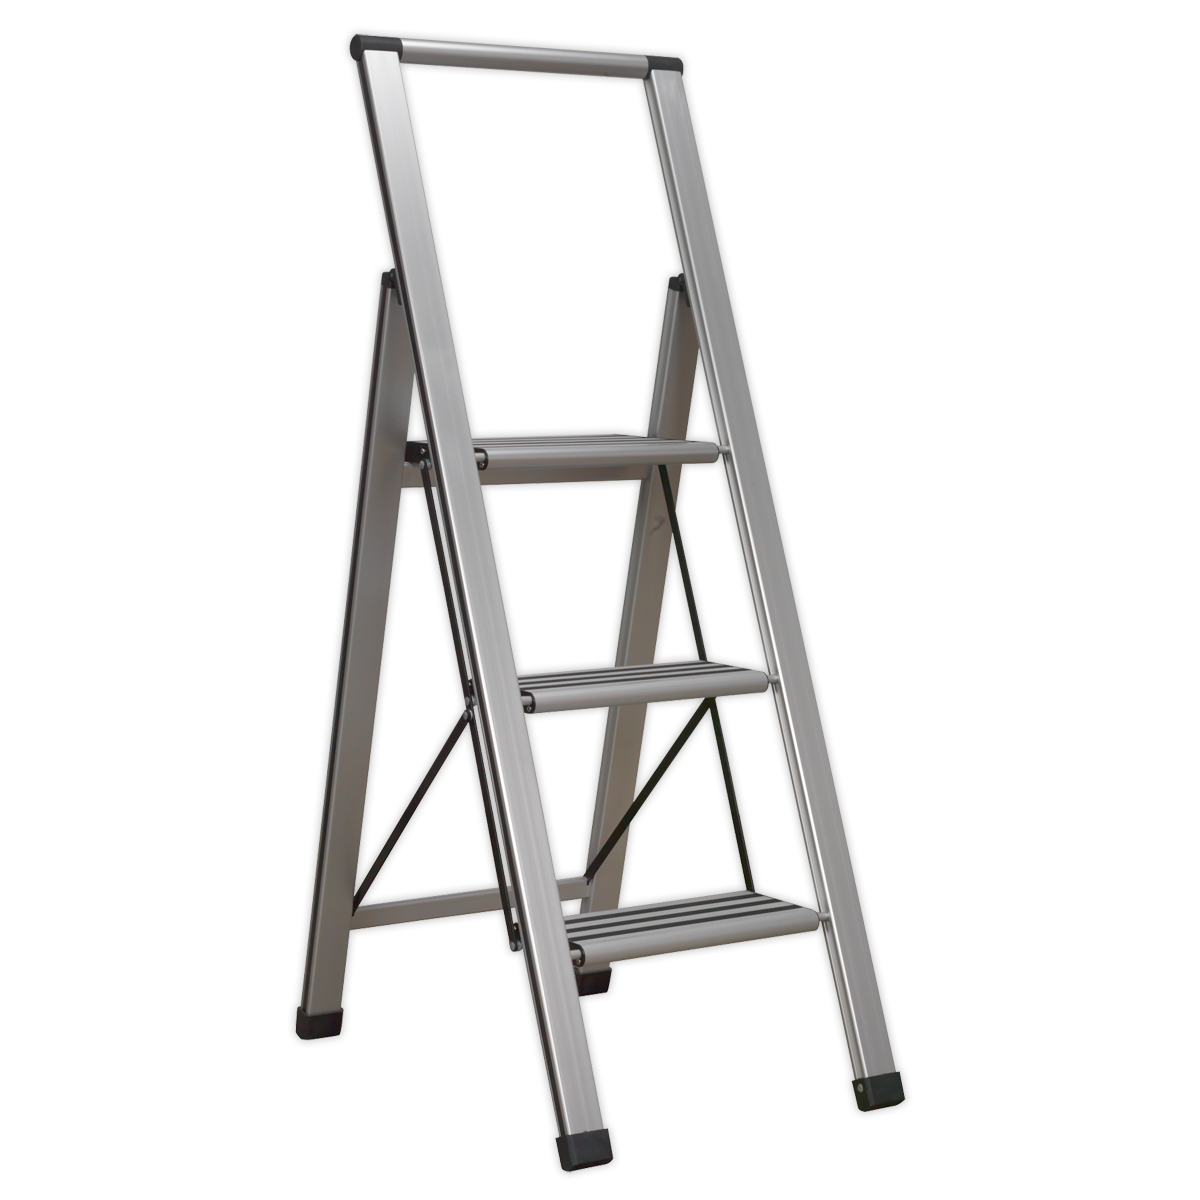 Sealey Aluminium Professional Folding Step Ladder 3-Step 150kg Capacity